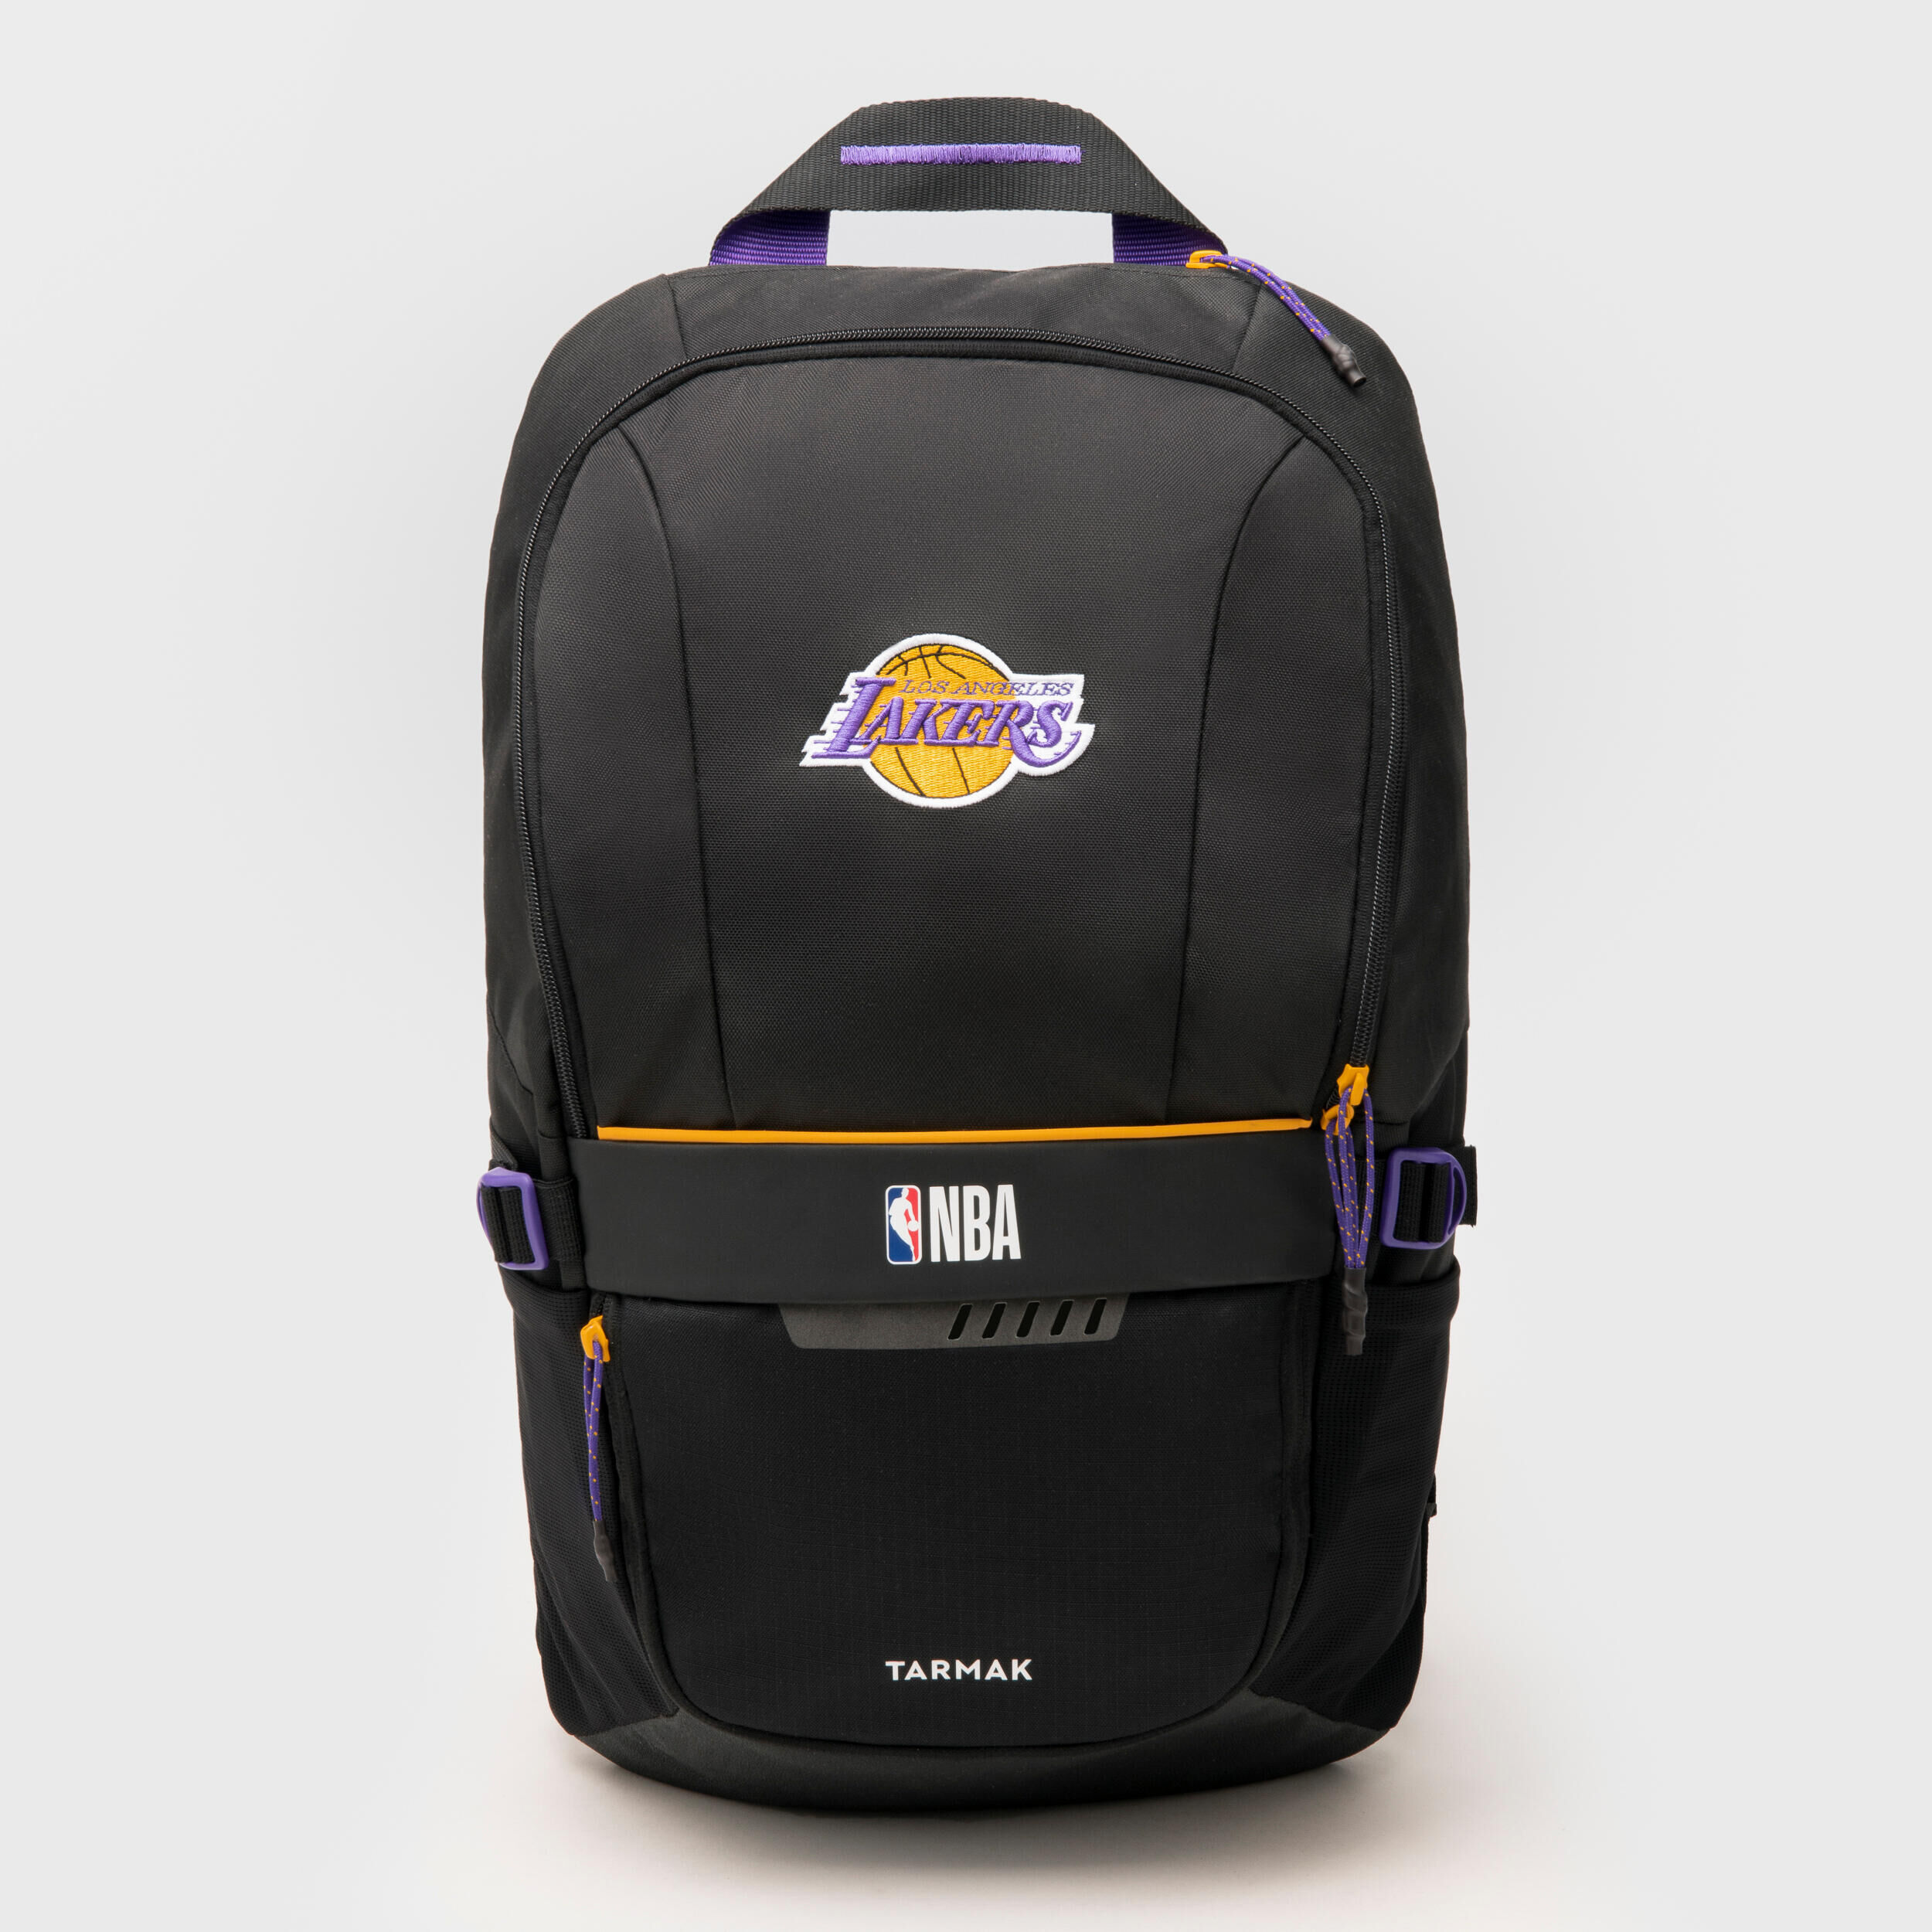 TARMAK Basketball Backpack 25 L - NBA Los Angeles Lakers